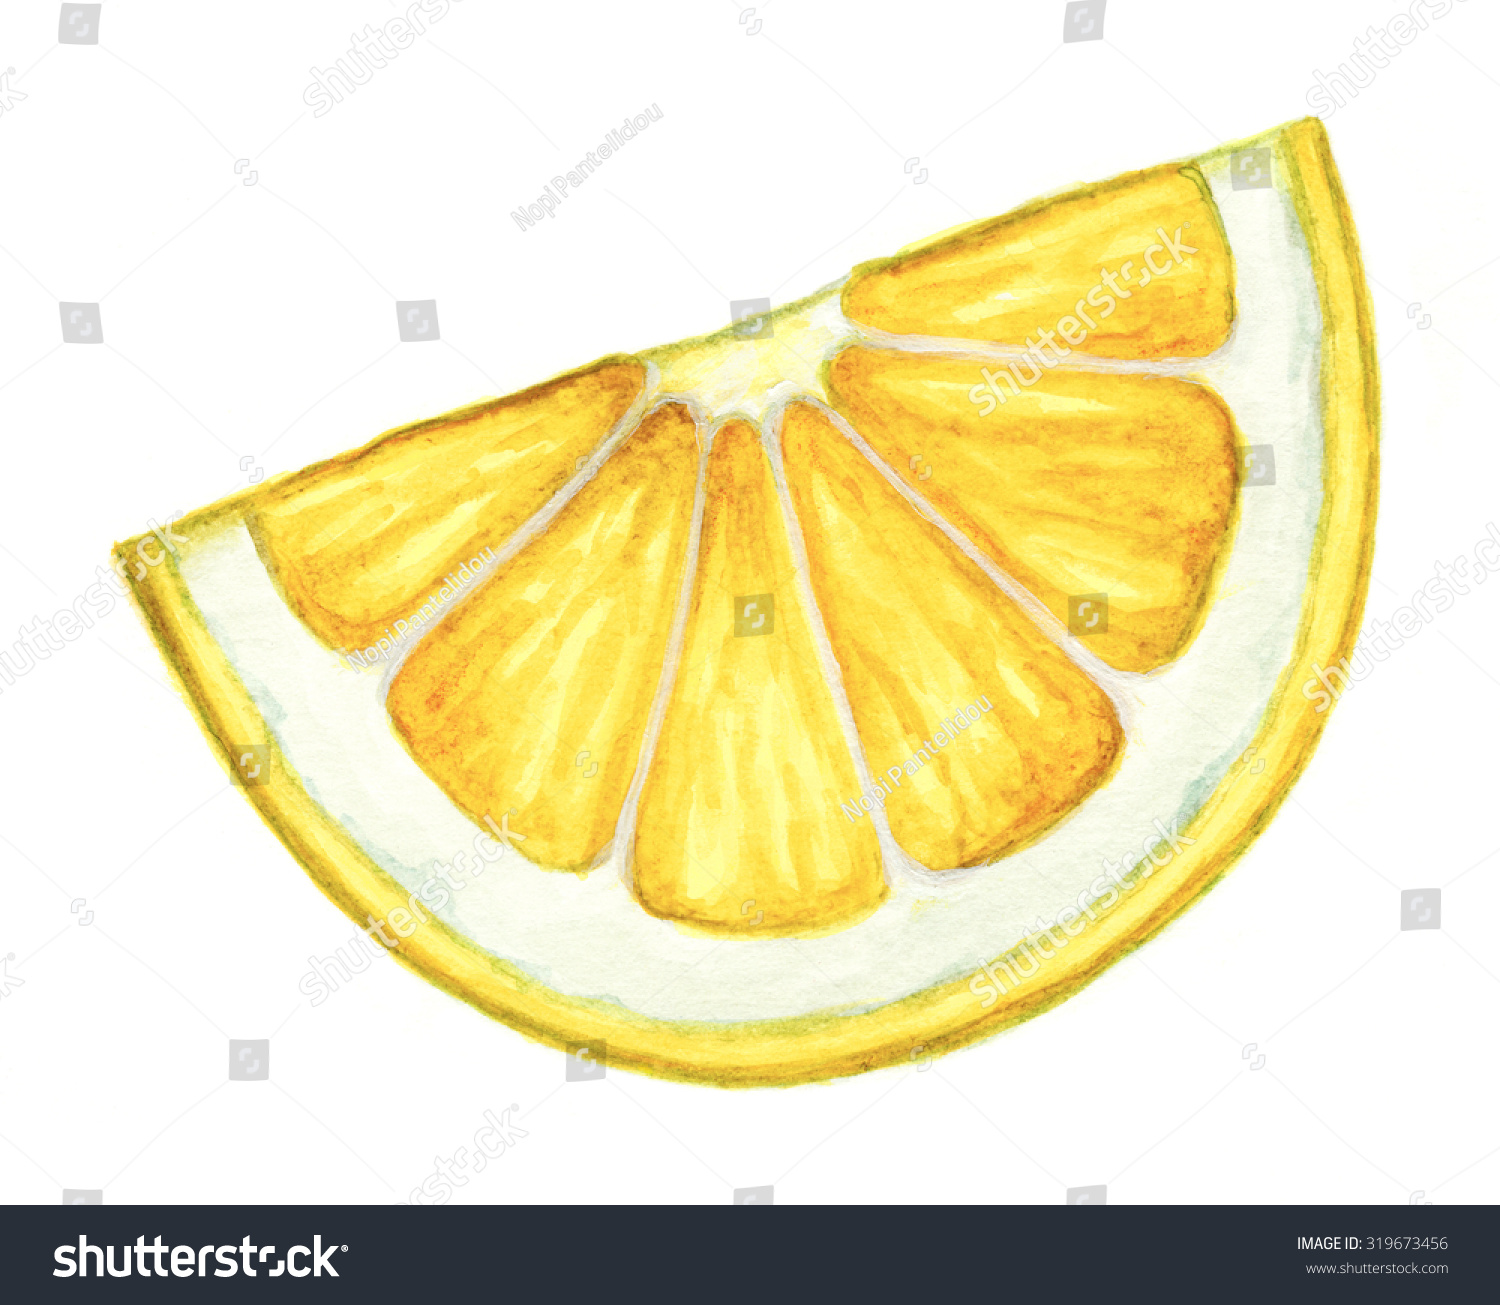 Половинка дольки лимона